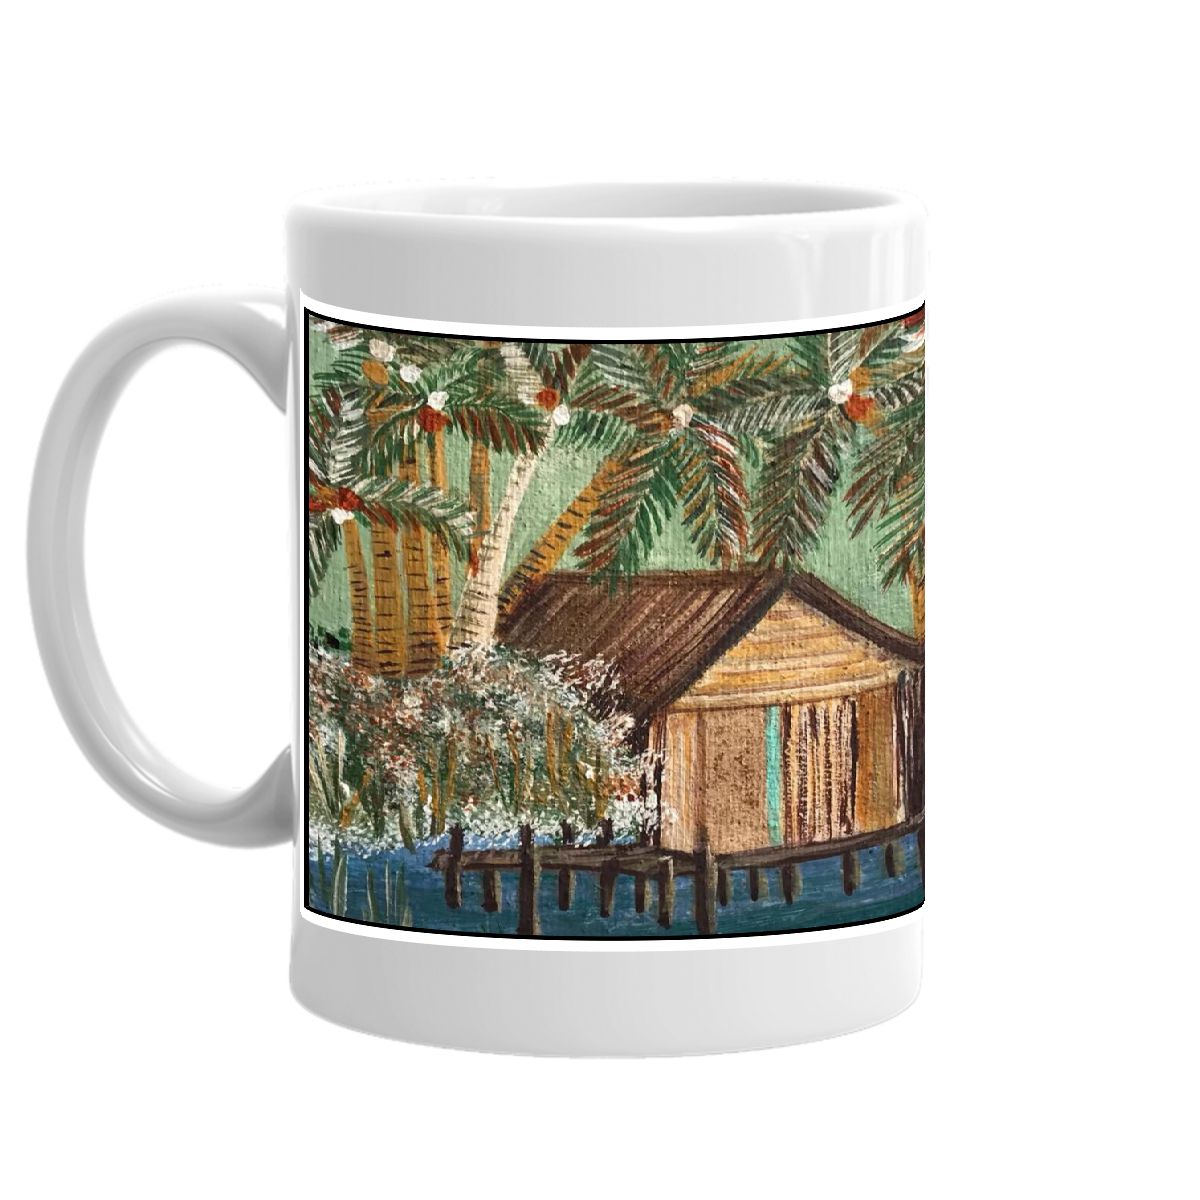 Amazon Rainforest Mugs